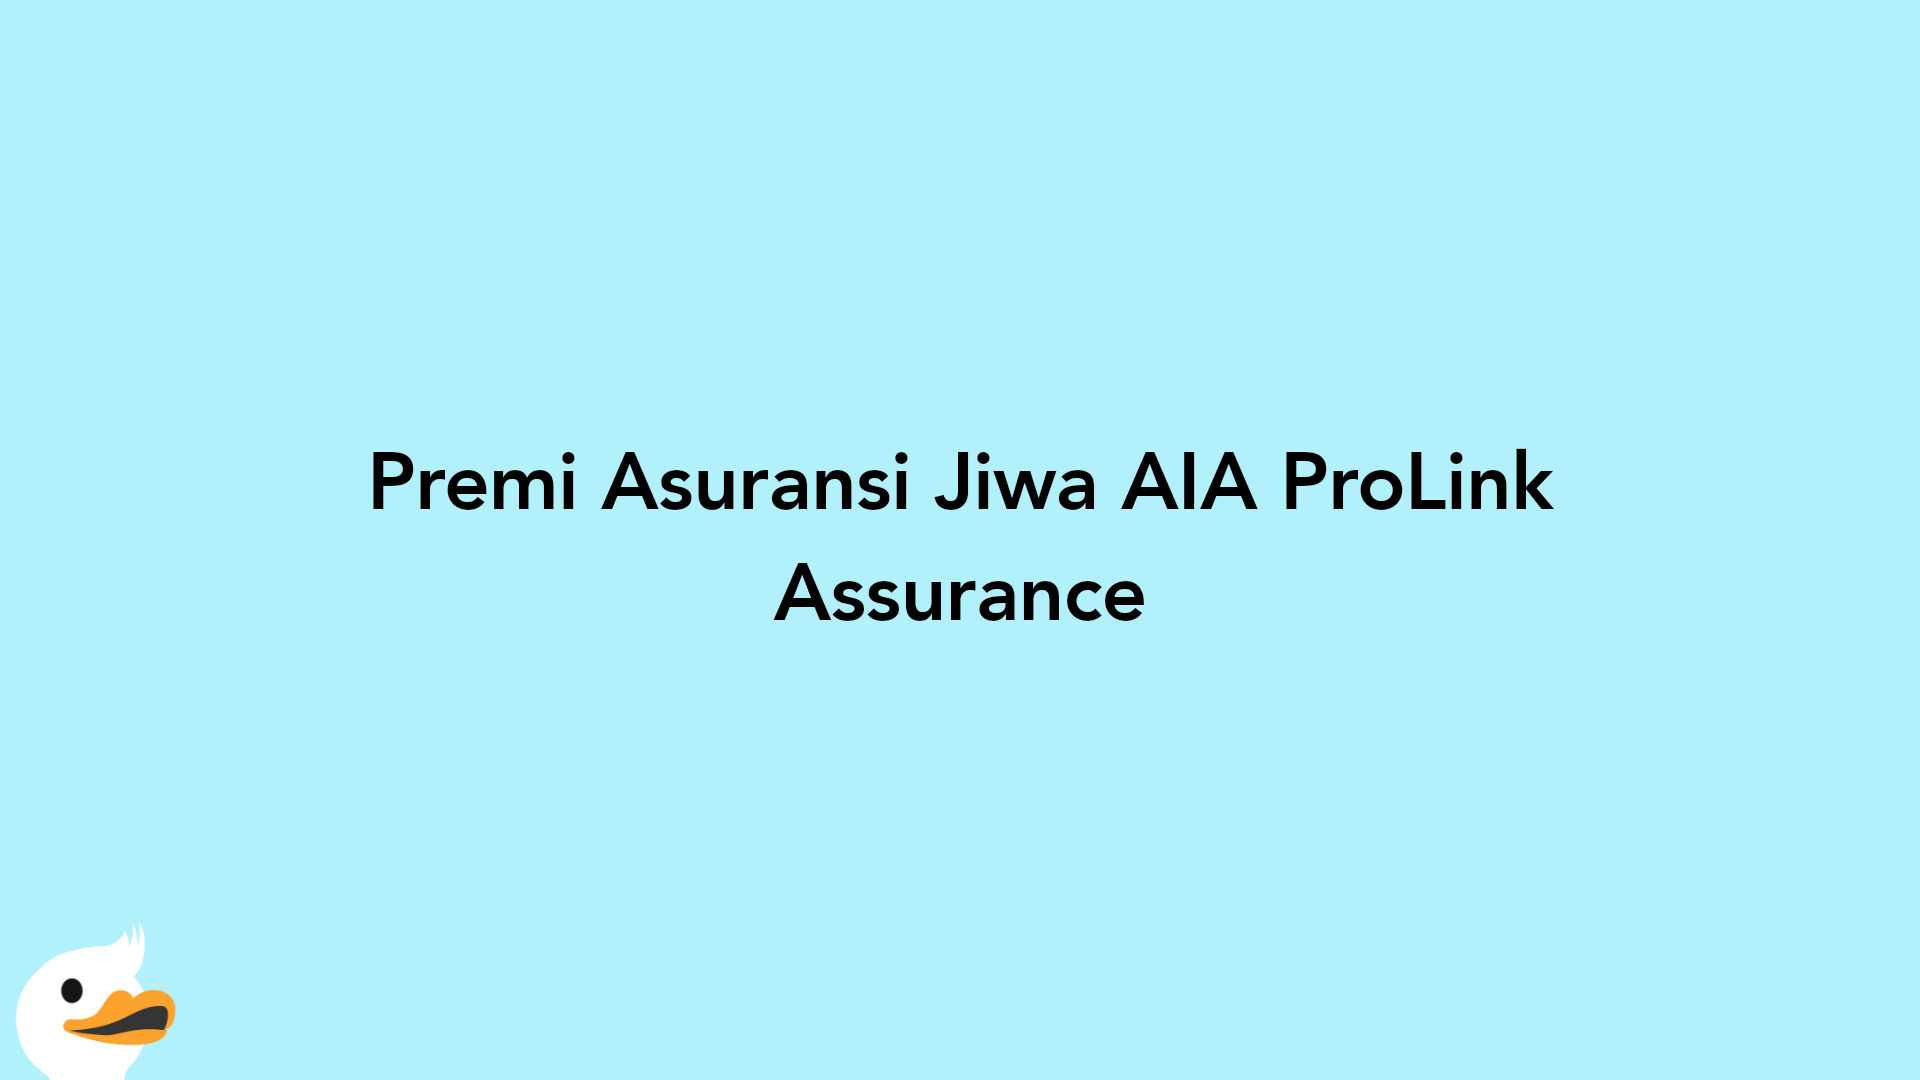 Premi Asuransi Jiwa AIA ProLink Assurance